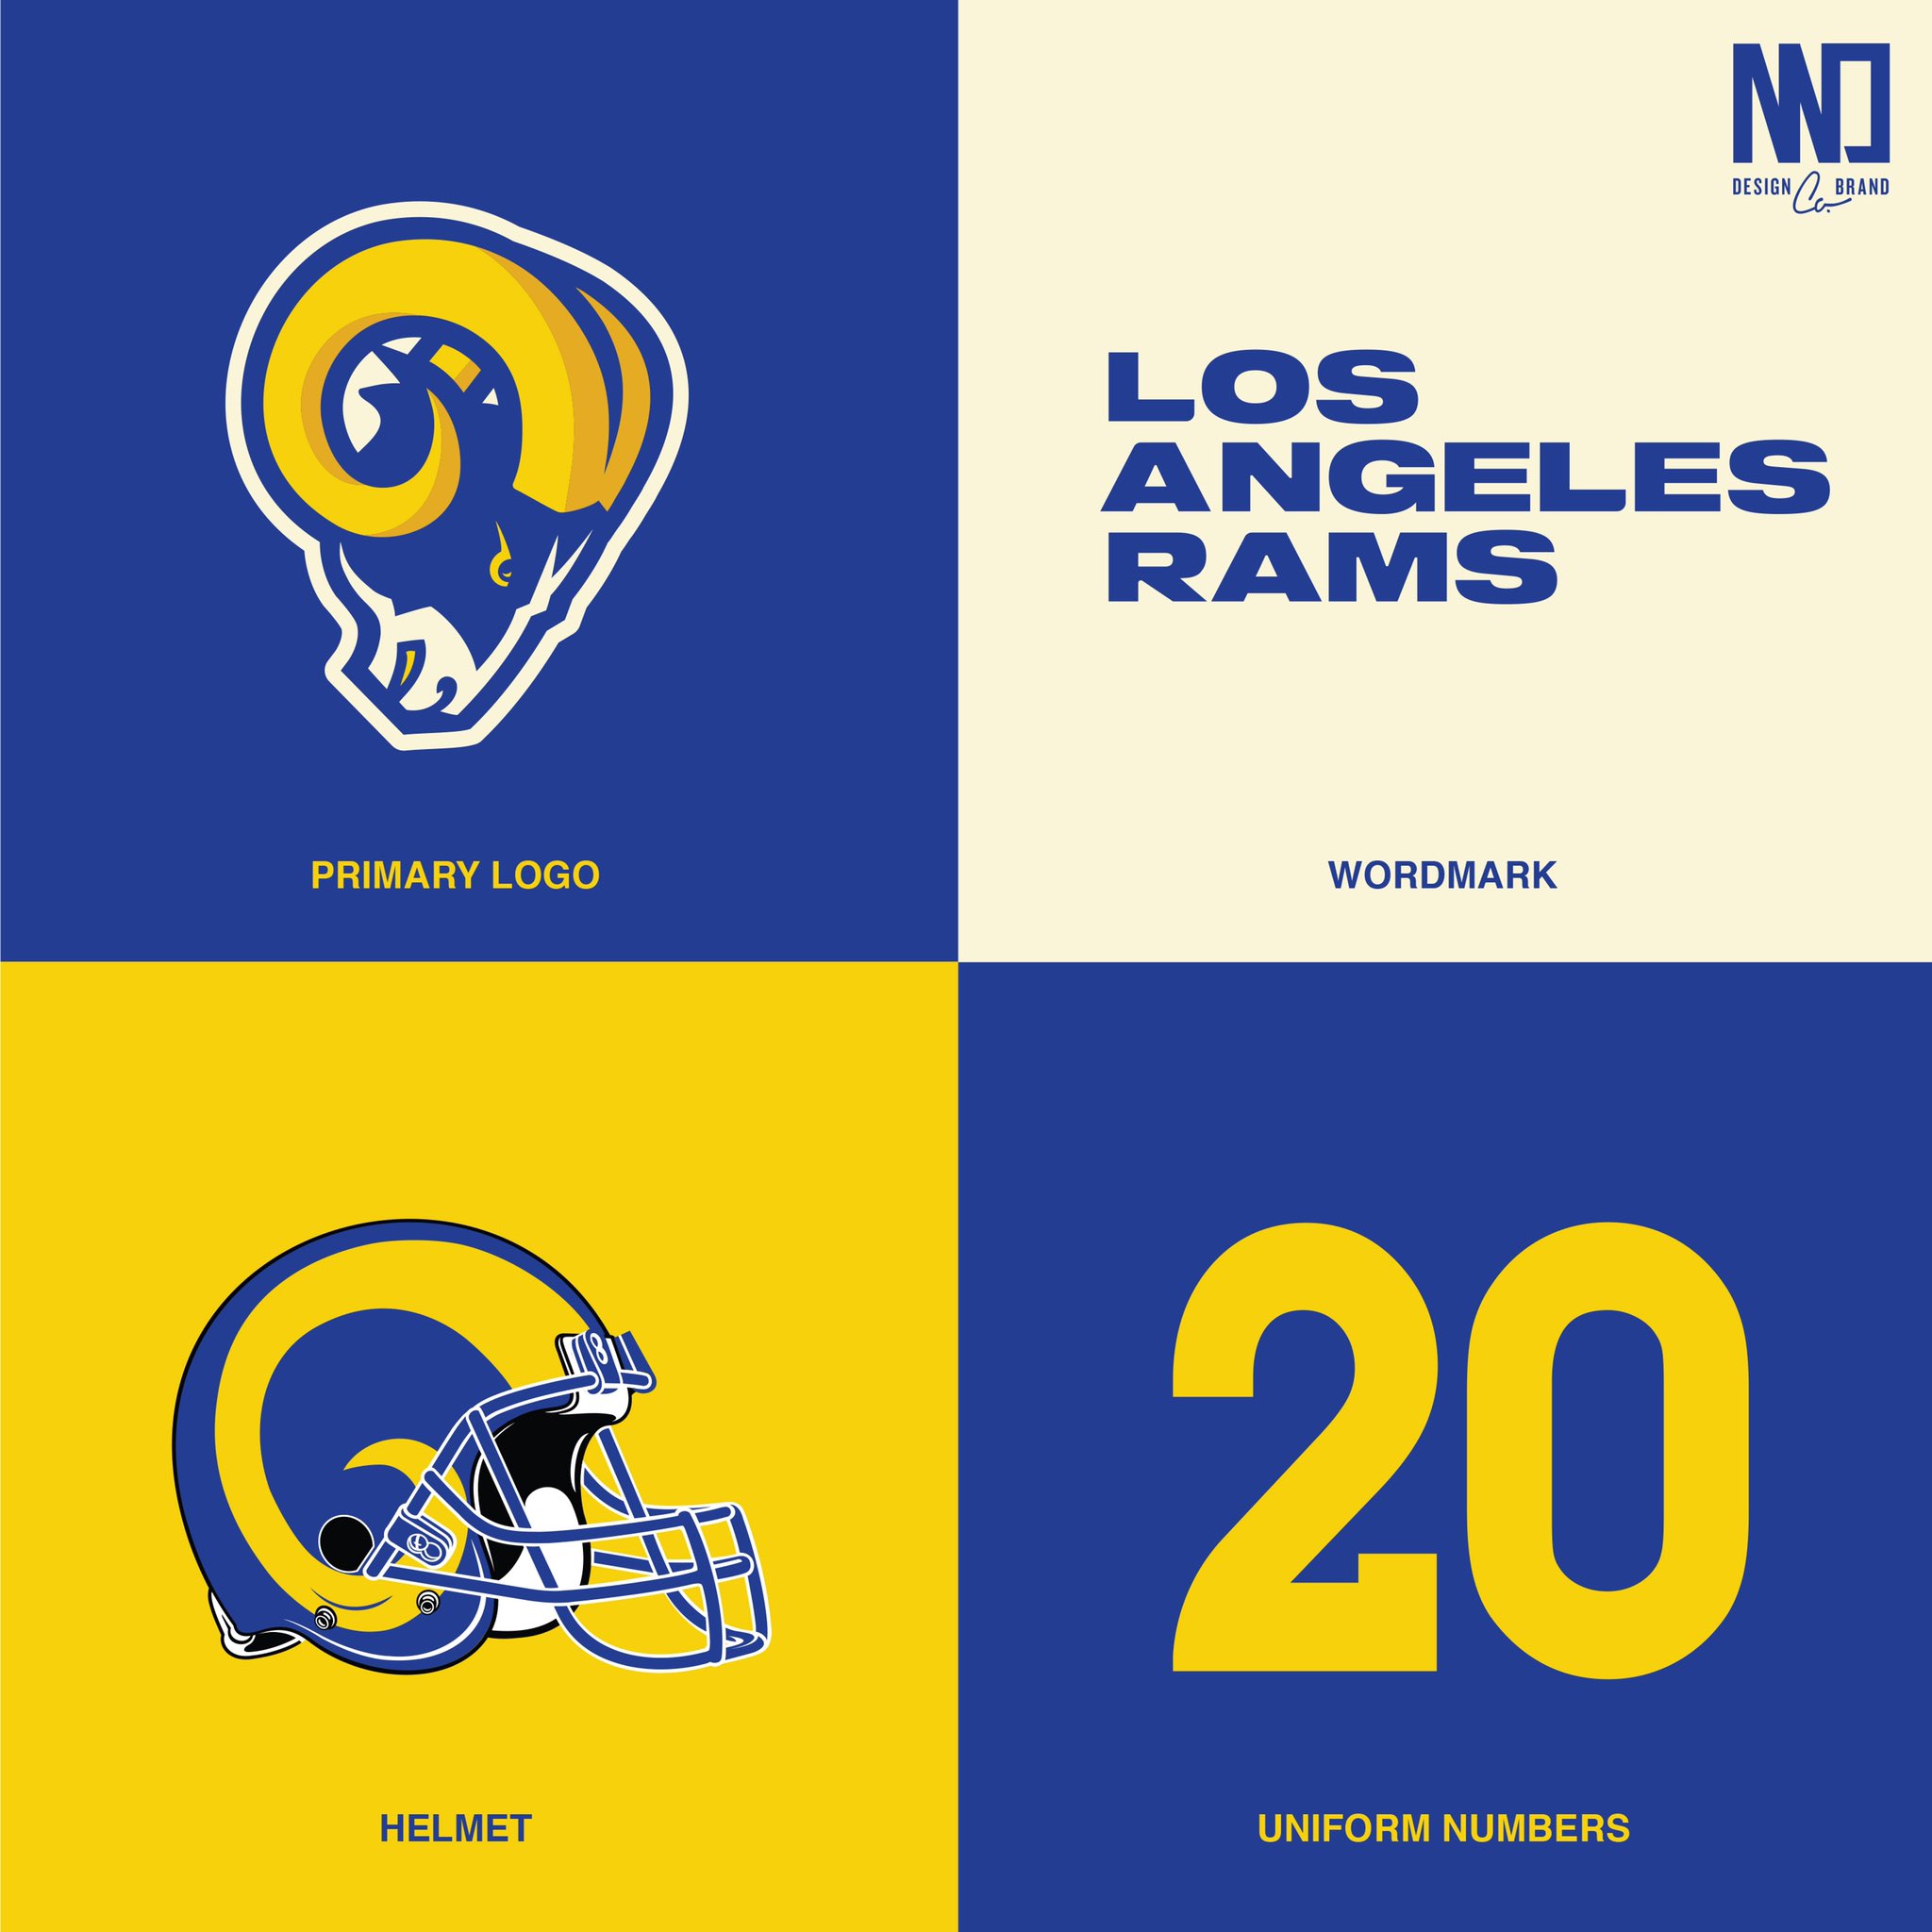 Zizzo Printing on X: Los Angeles Rams logo and jersey tweak/concept. • # rams #nfl #larams #football #losangelesrams #ramshouse #losangeles  #ramsnation #hornsup #ramily #nfcwest #superbowl #la #ram #gorams #sports  #ninodesignbrand